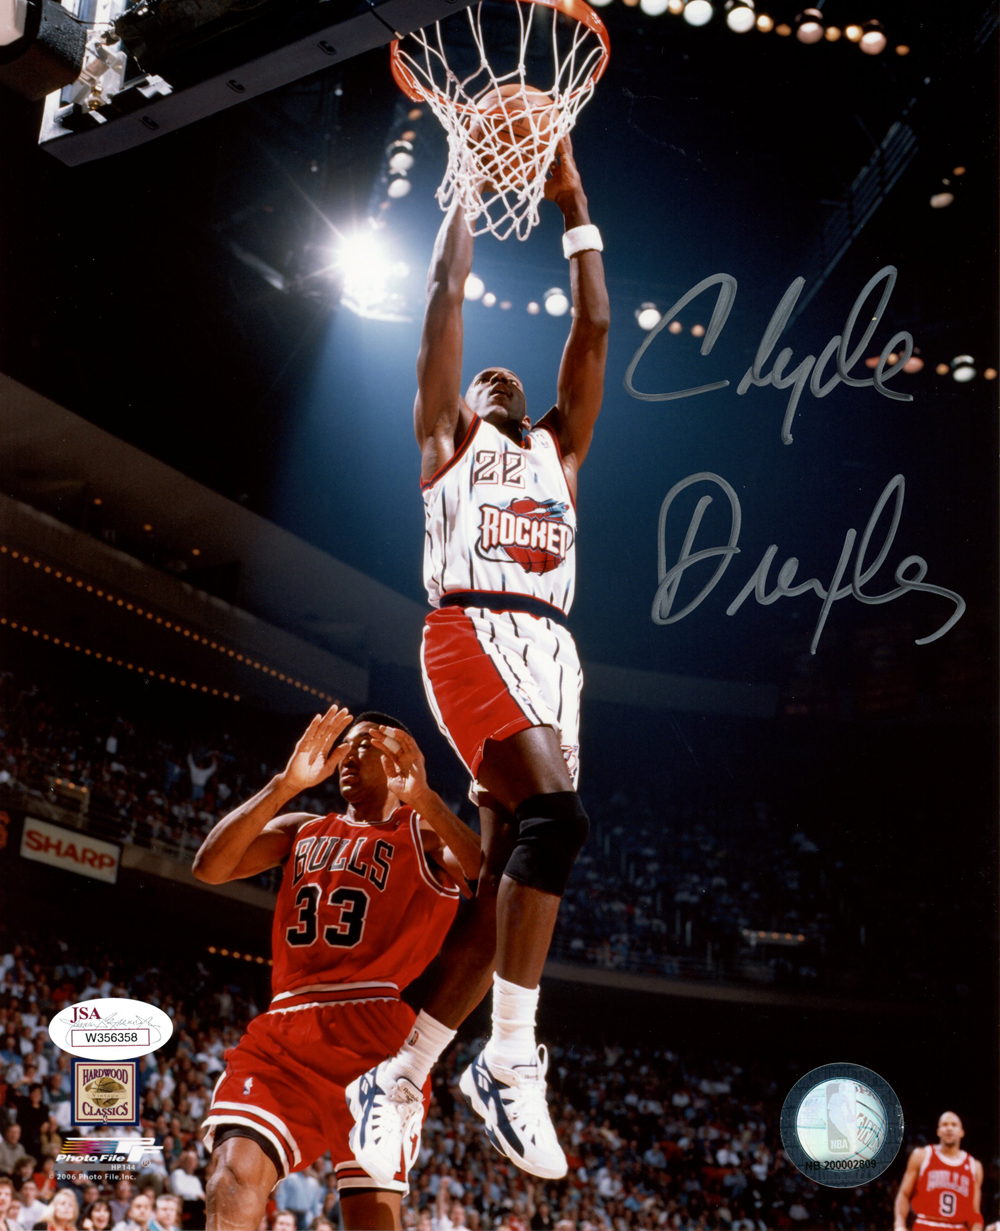 Clyde Drexler Autographed/Signed Houston Rockets 8x10 Photo JSA